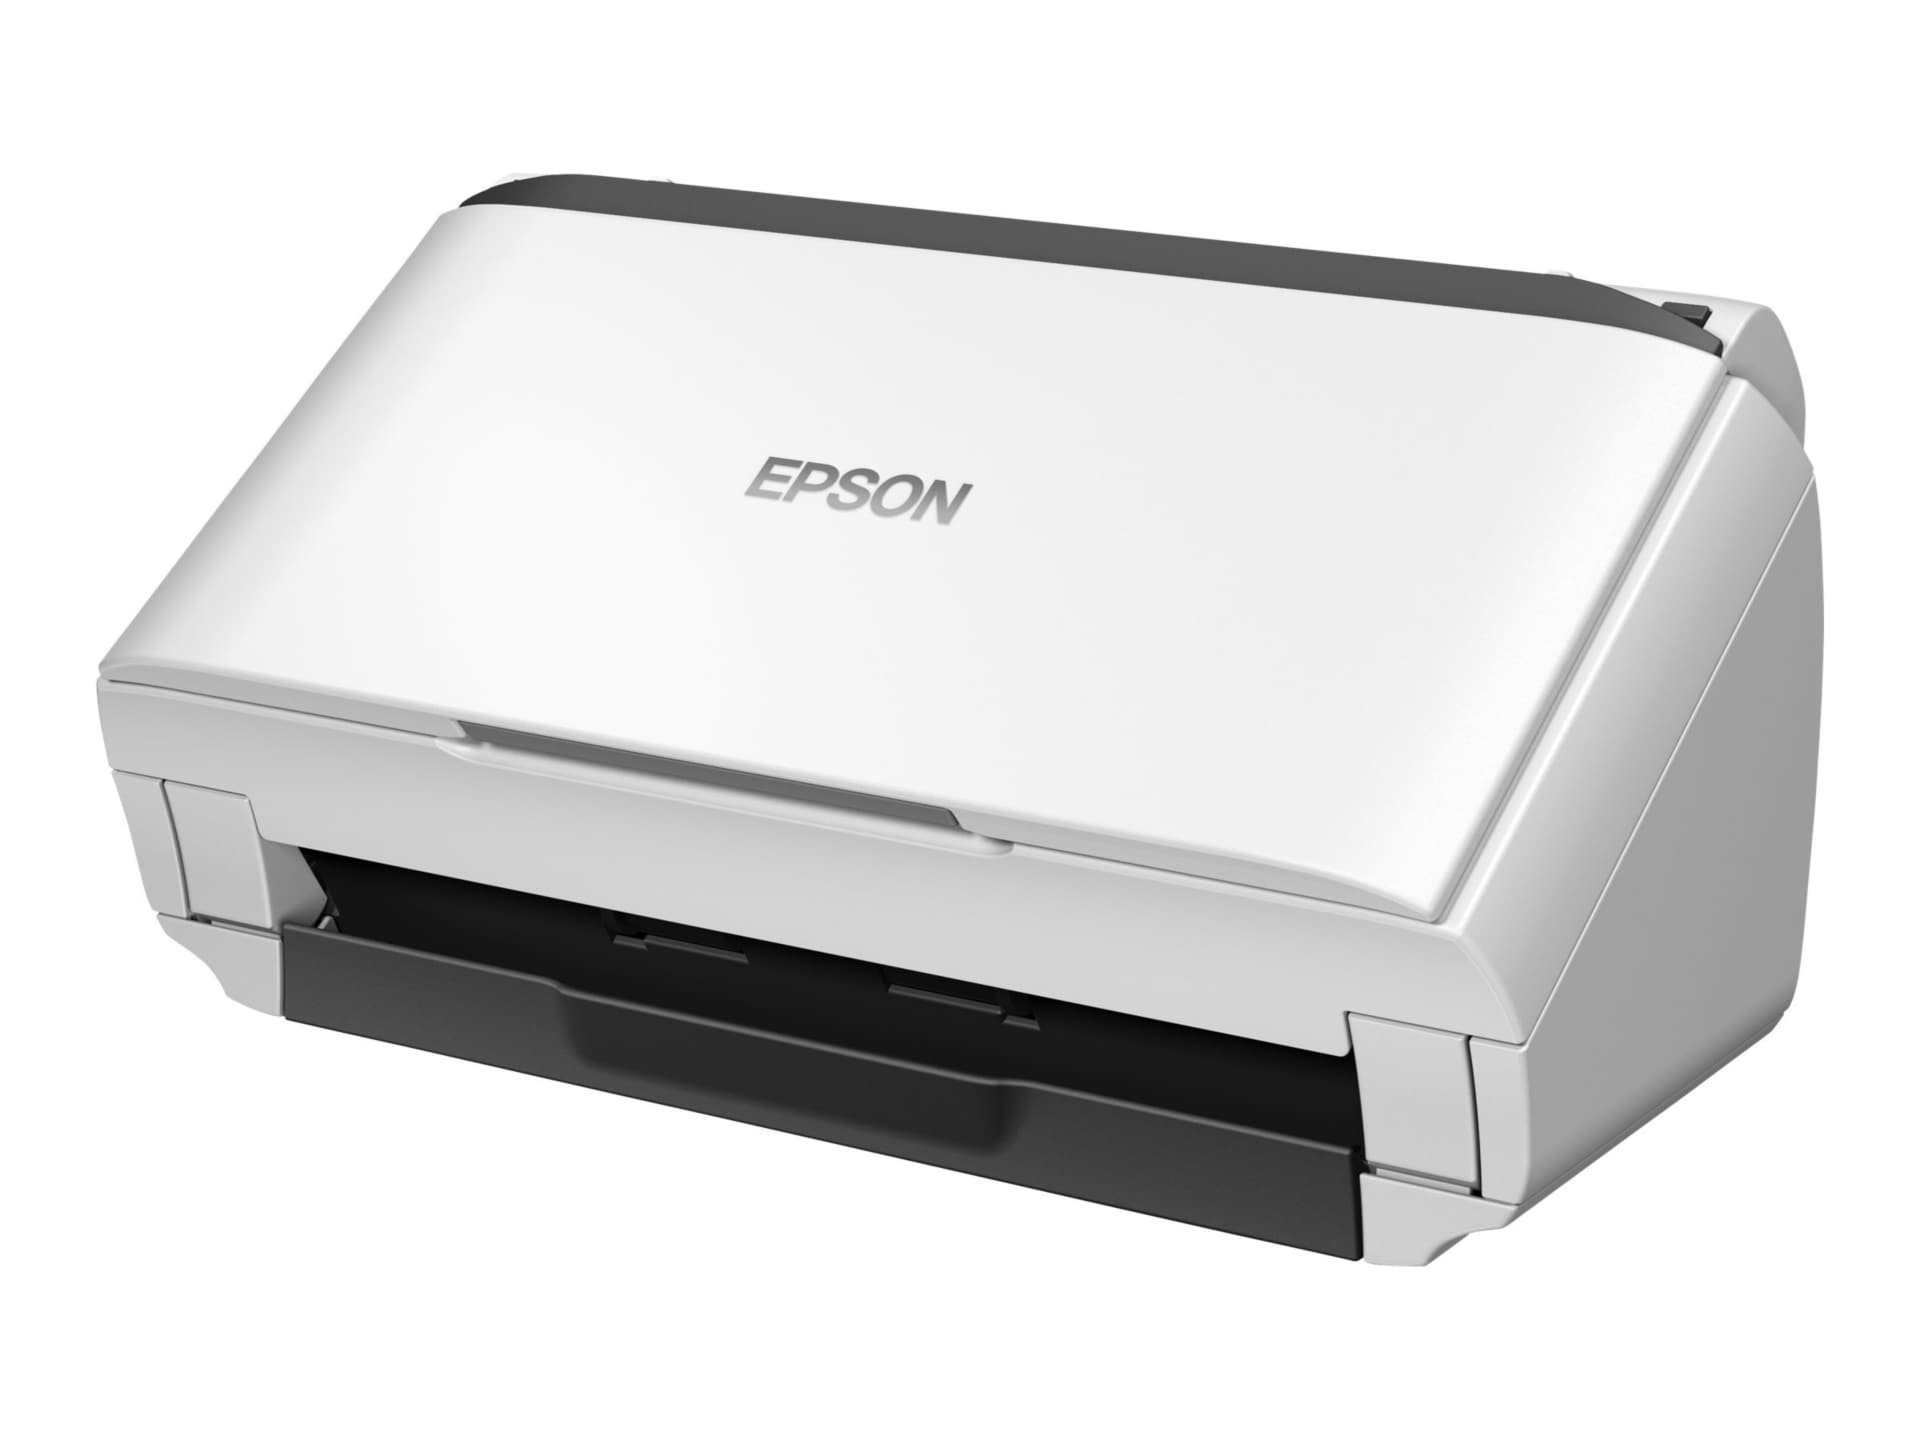 Epson WorkForce DS-410 - document scanner - desktop - USB 2.0